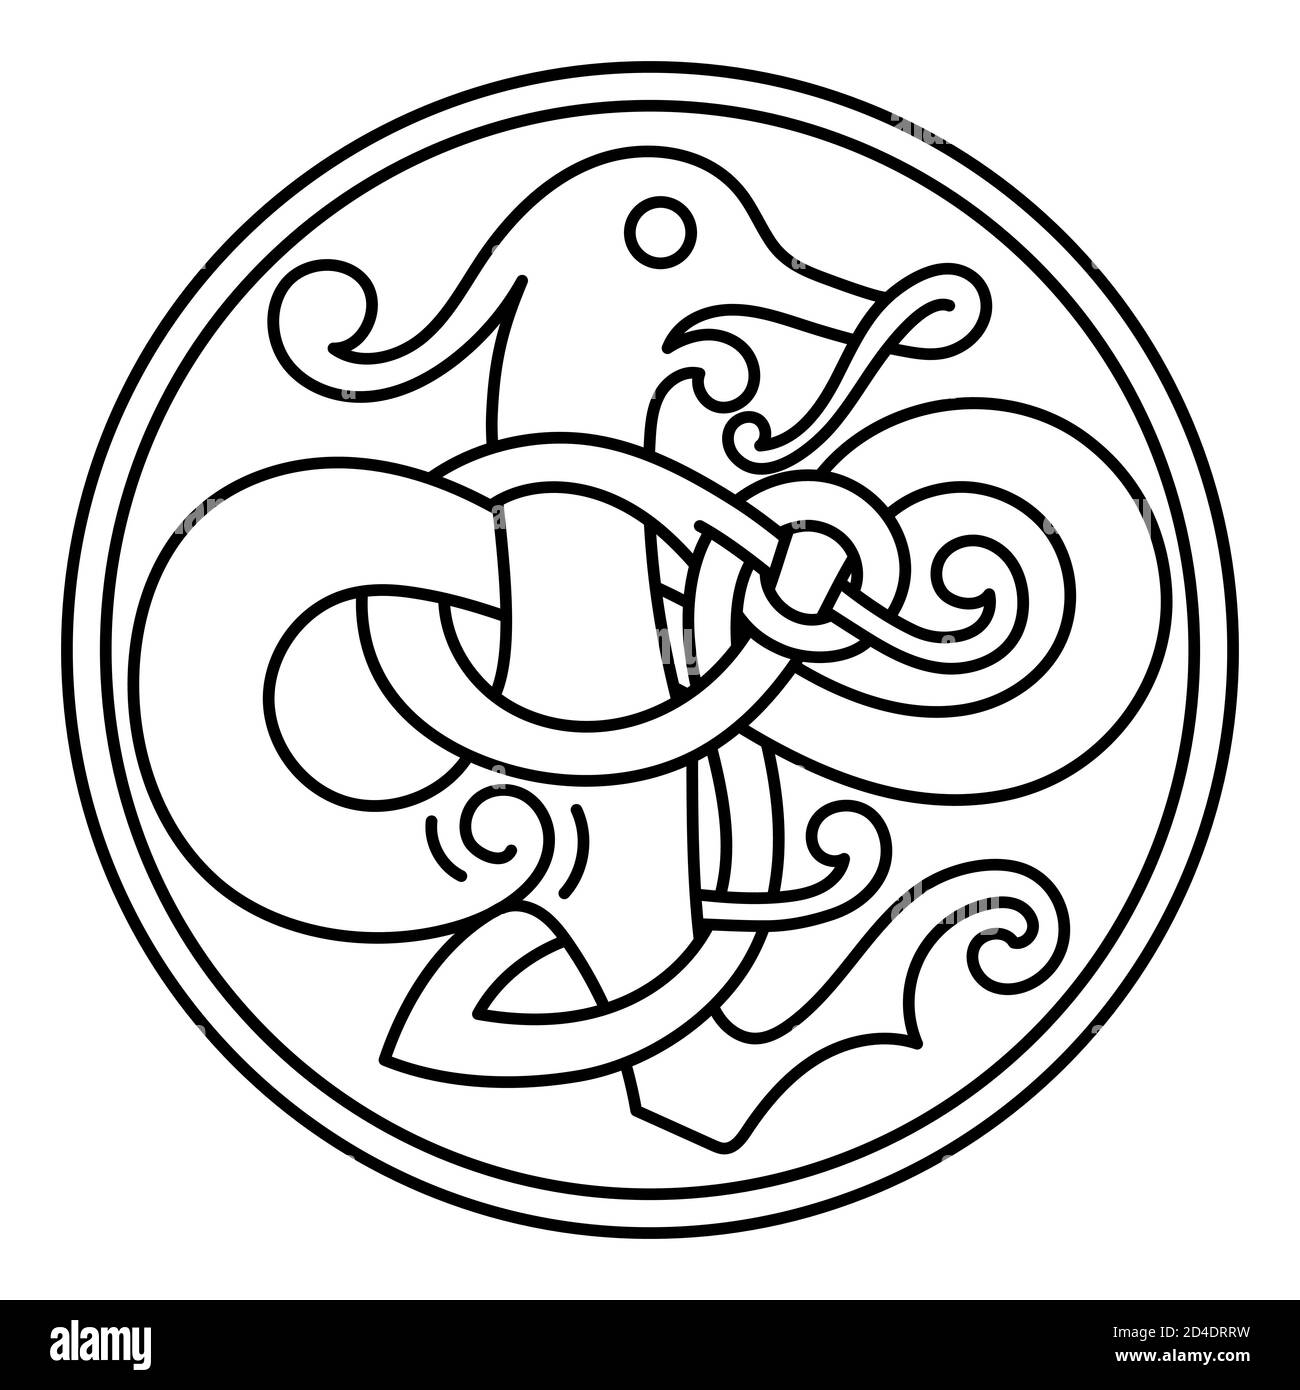 Vintage Dragon. Illustration in the Scandinavian Celtic style Stock Vector